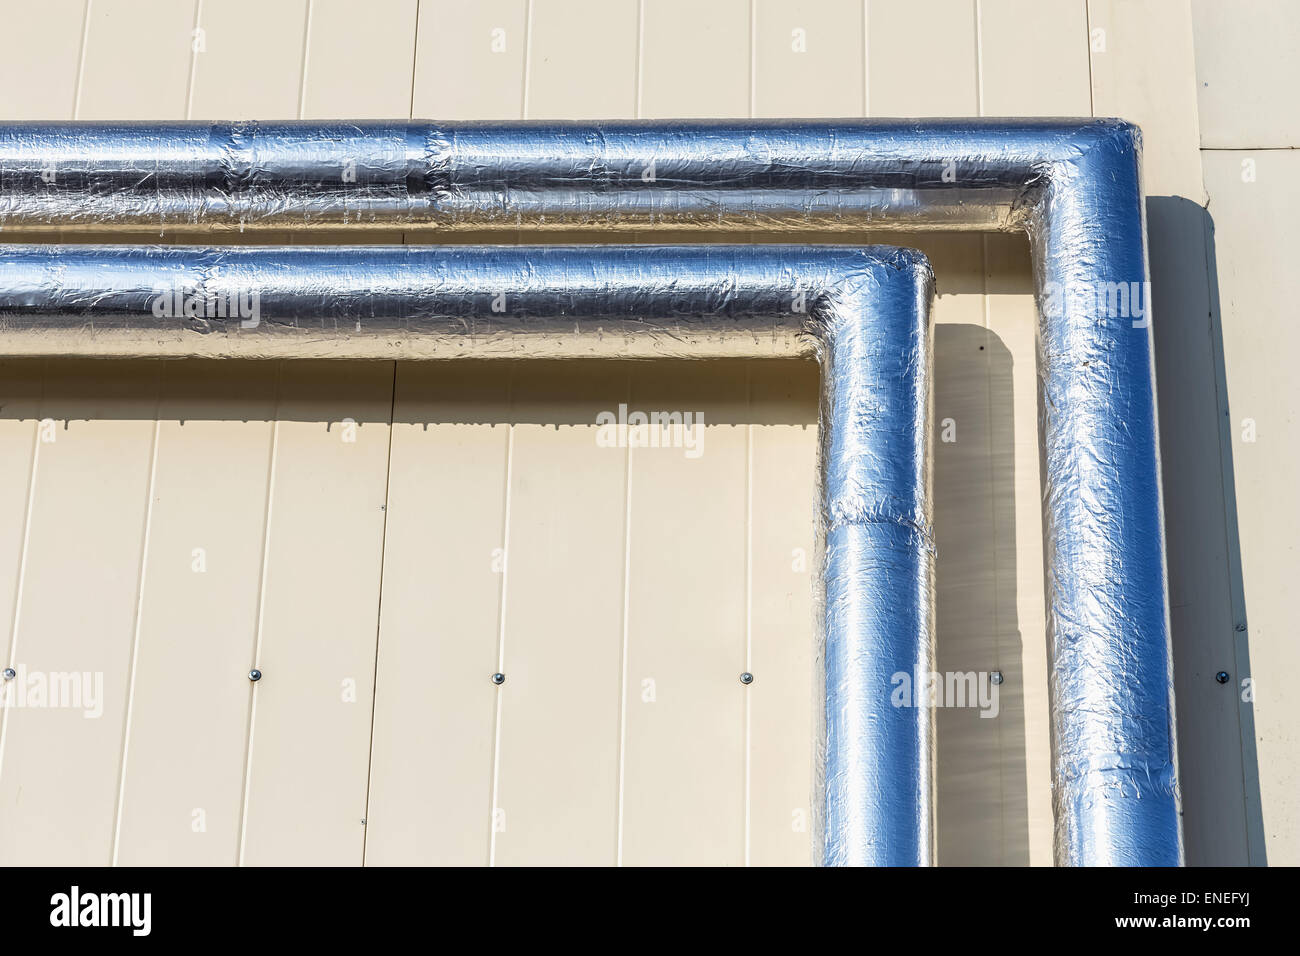 Metal chrome pipes on yellow plastic siding wall Stock Photo